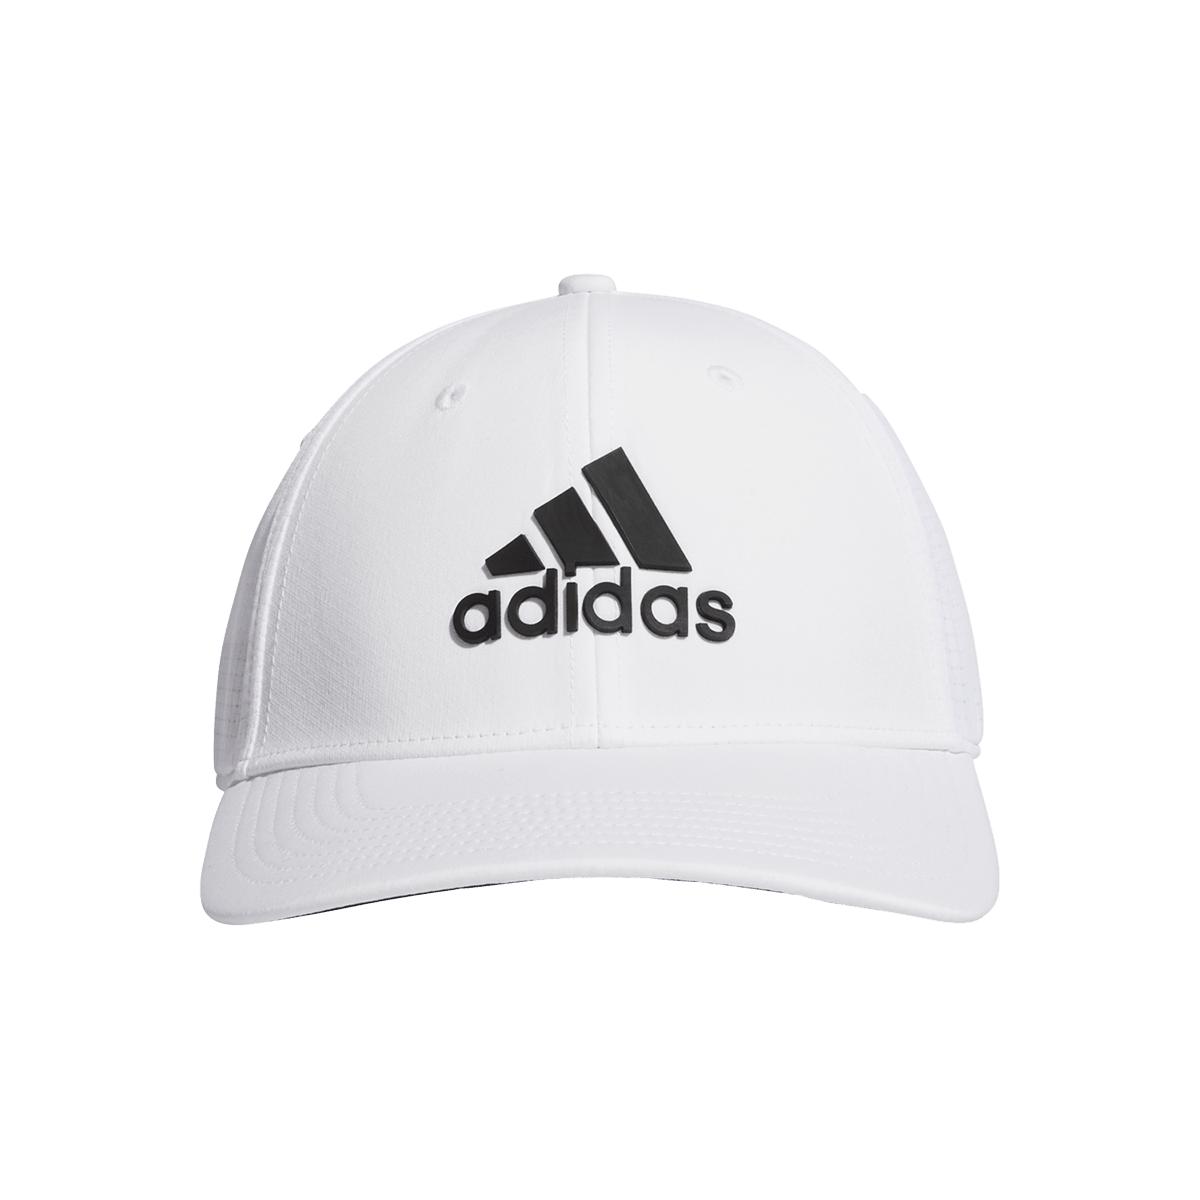 adidas golf tour hat